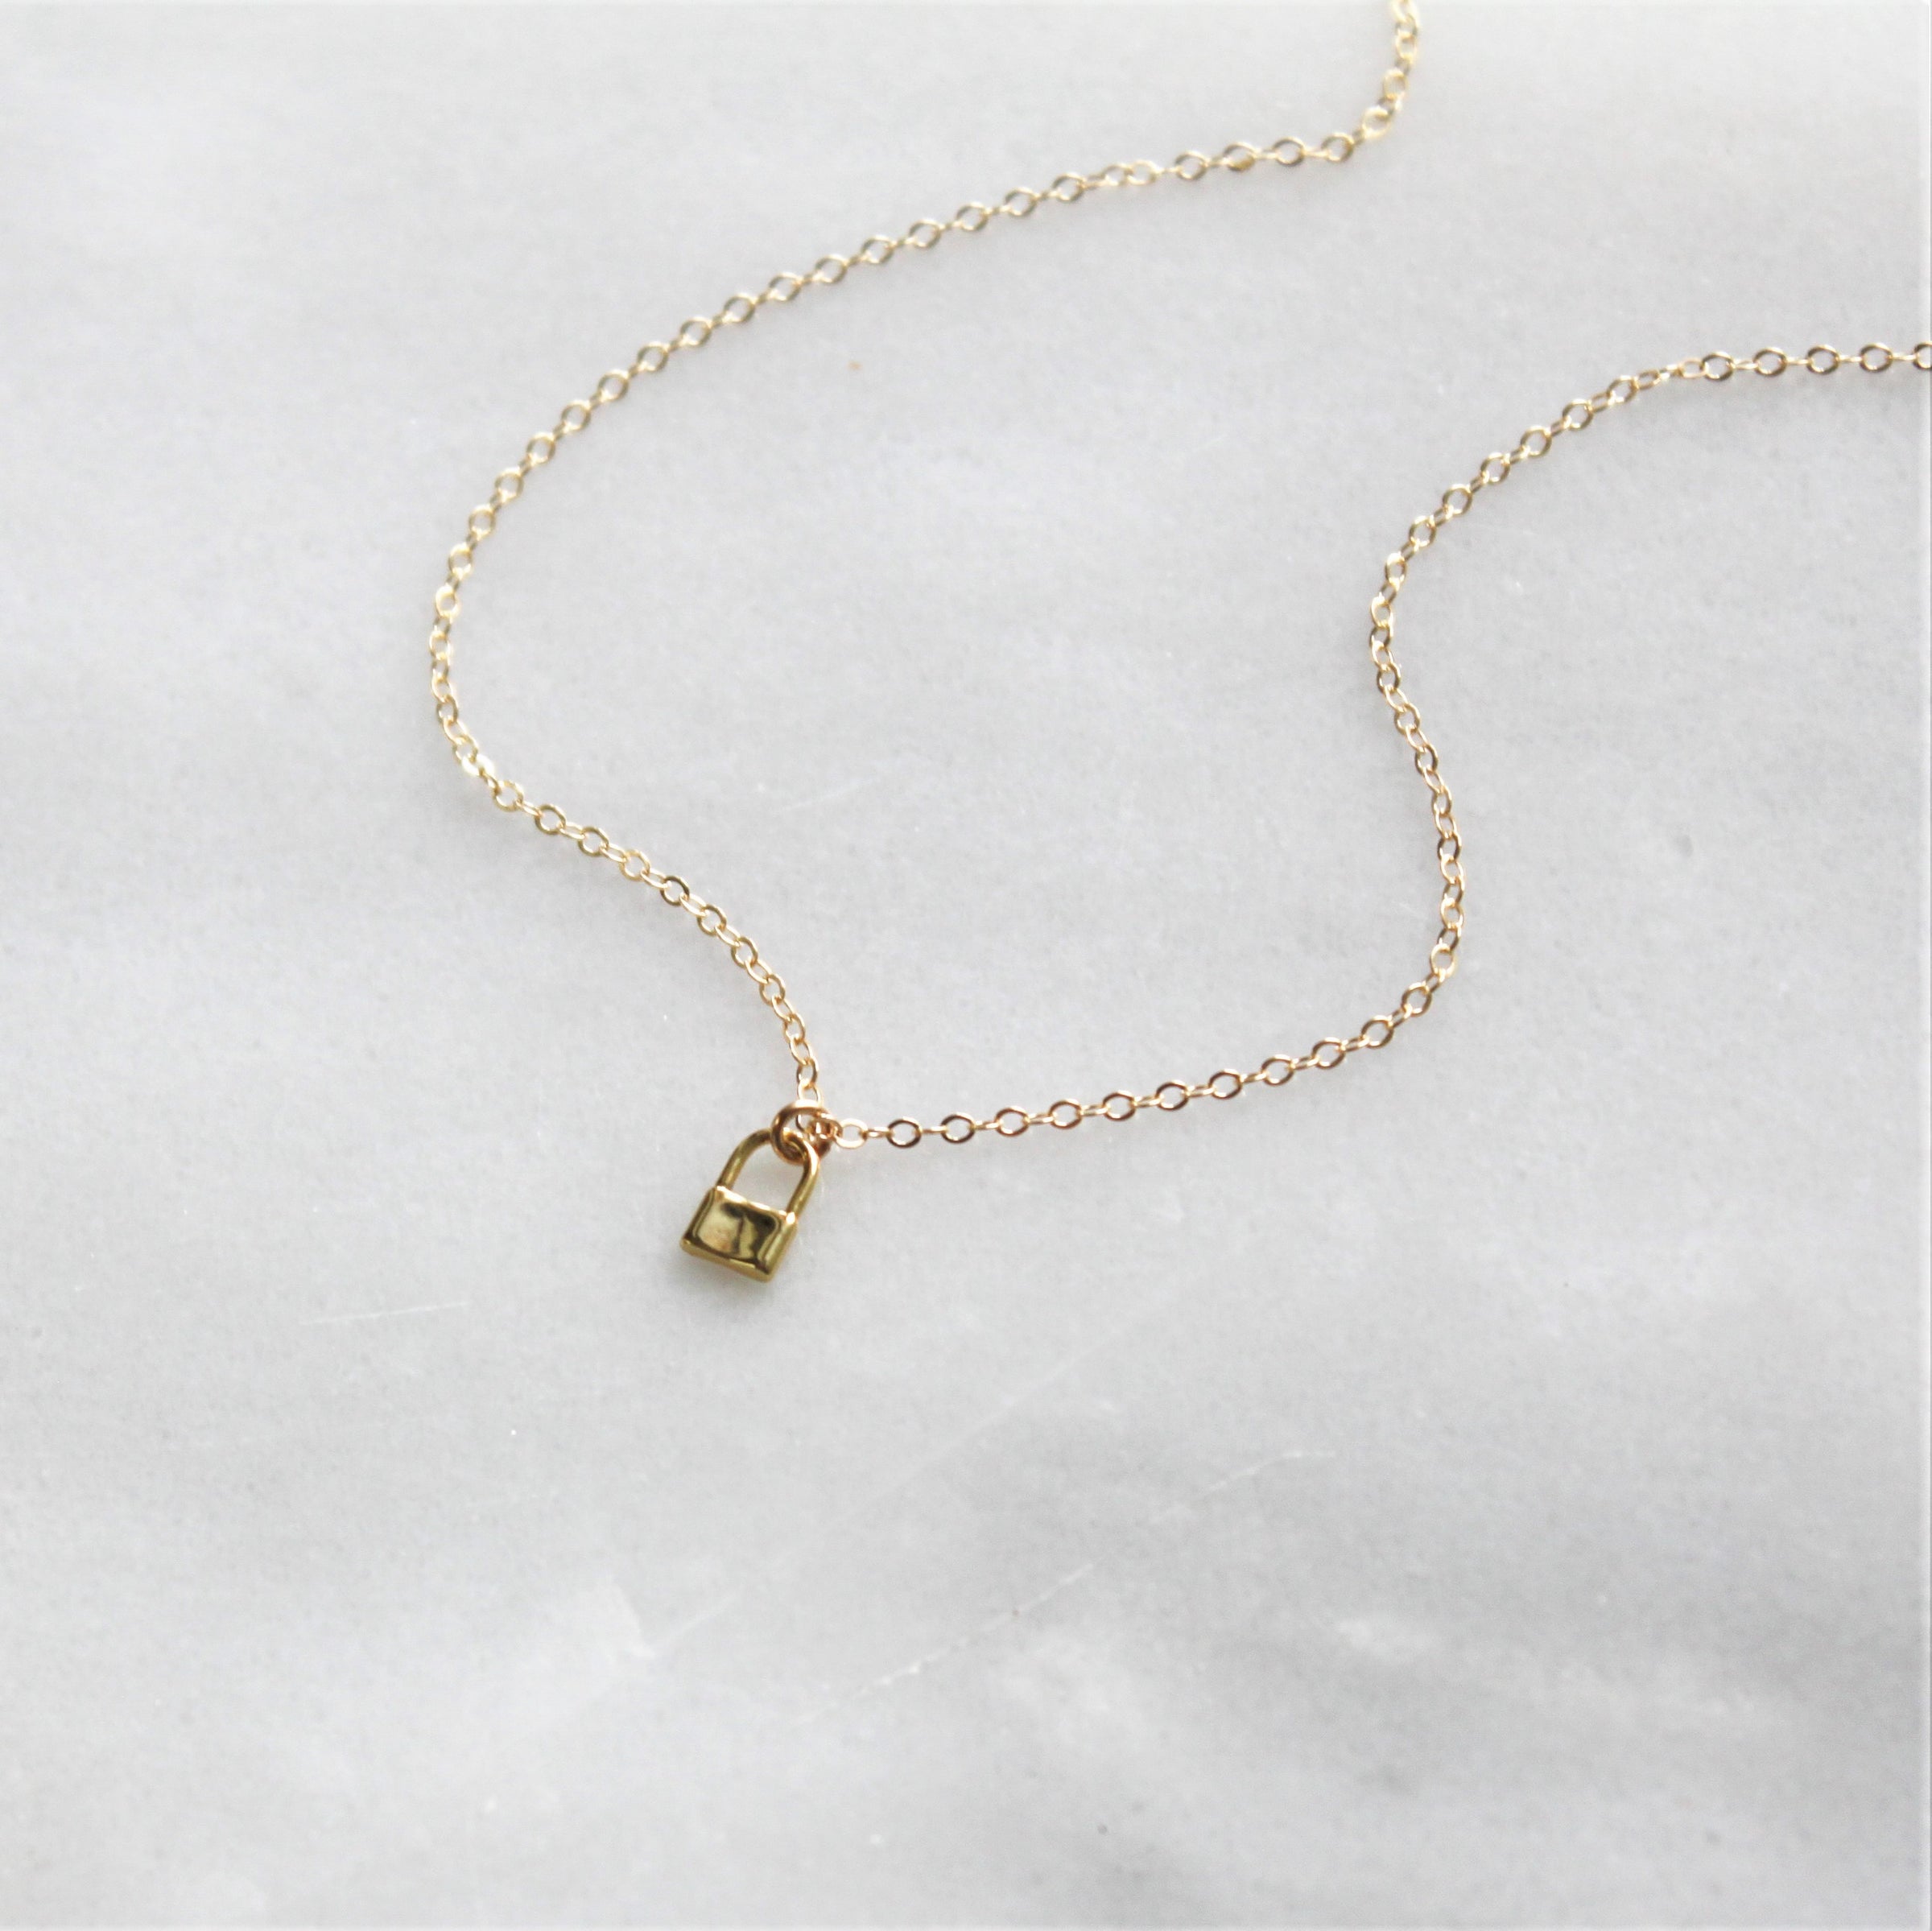 Teeny Tiny Padlock Necklace, 100% Sterling Silver, Silver Lock Choker,  Petite REAL Padlock, Opens & Closes, #944